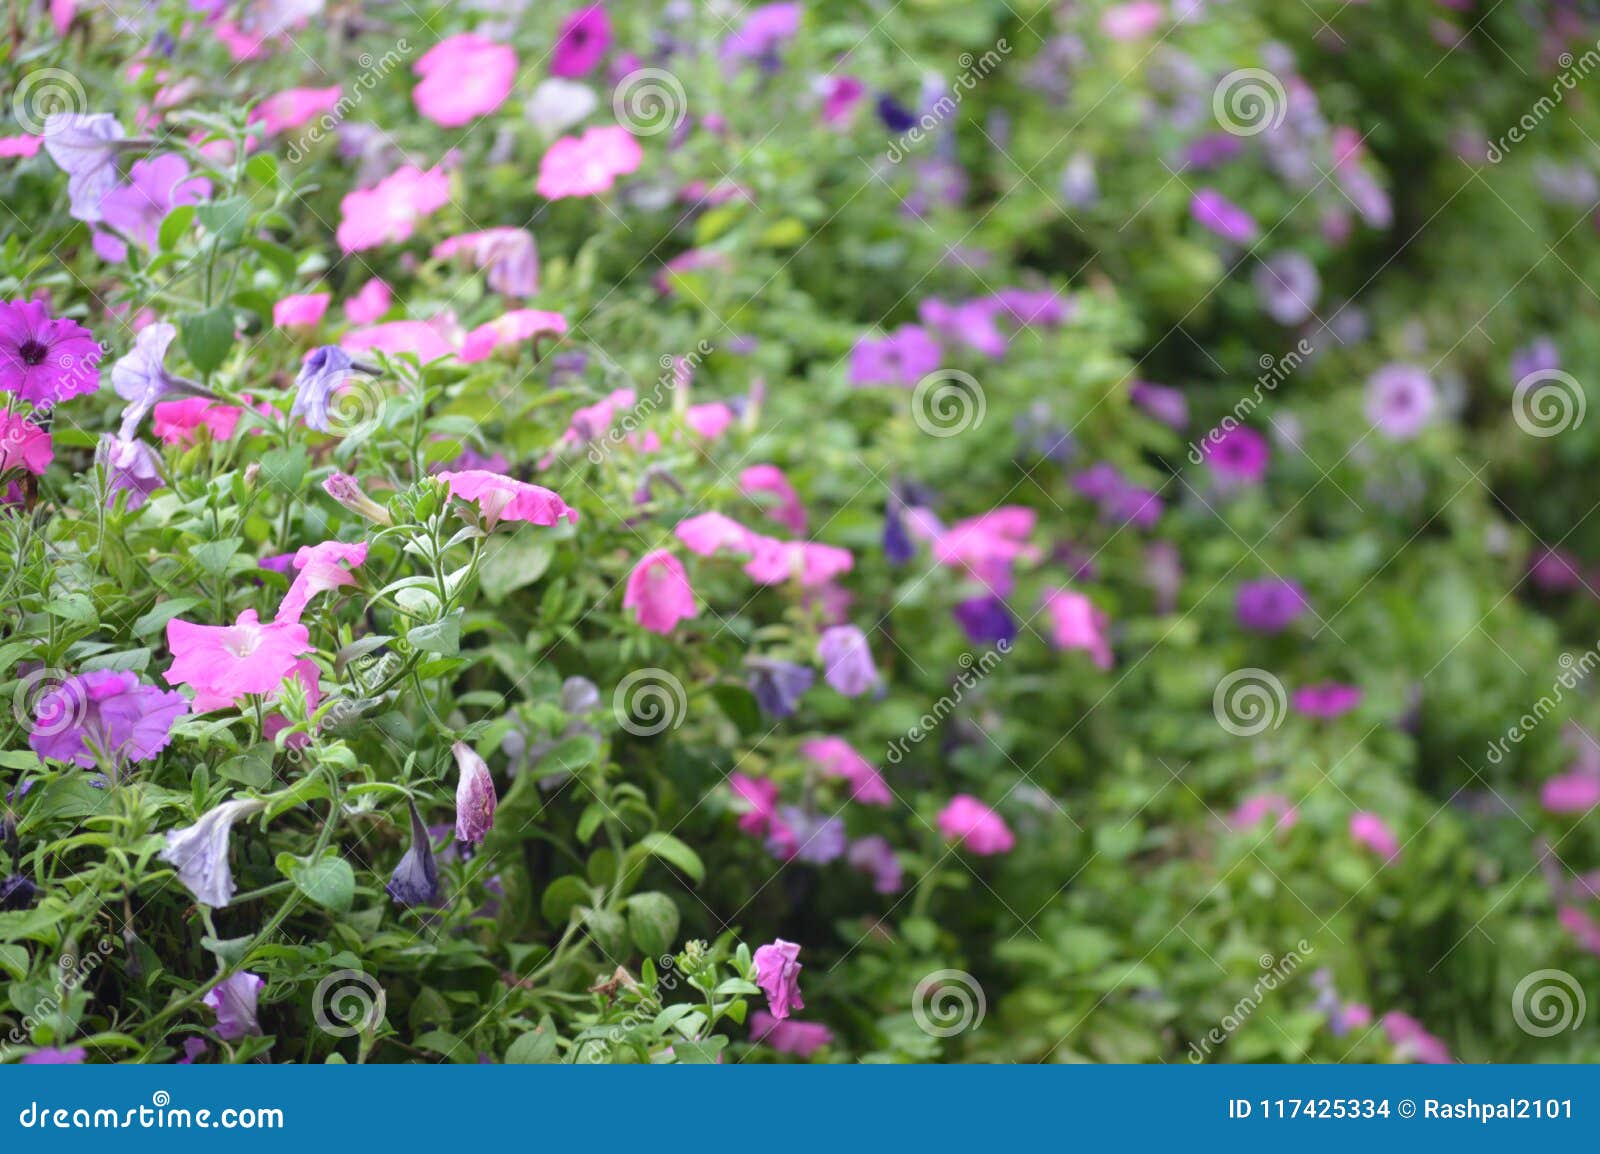 flower garden in cameron highland stock photo - image of botany